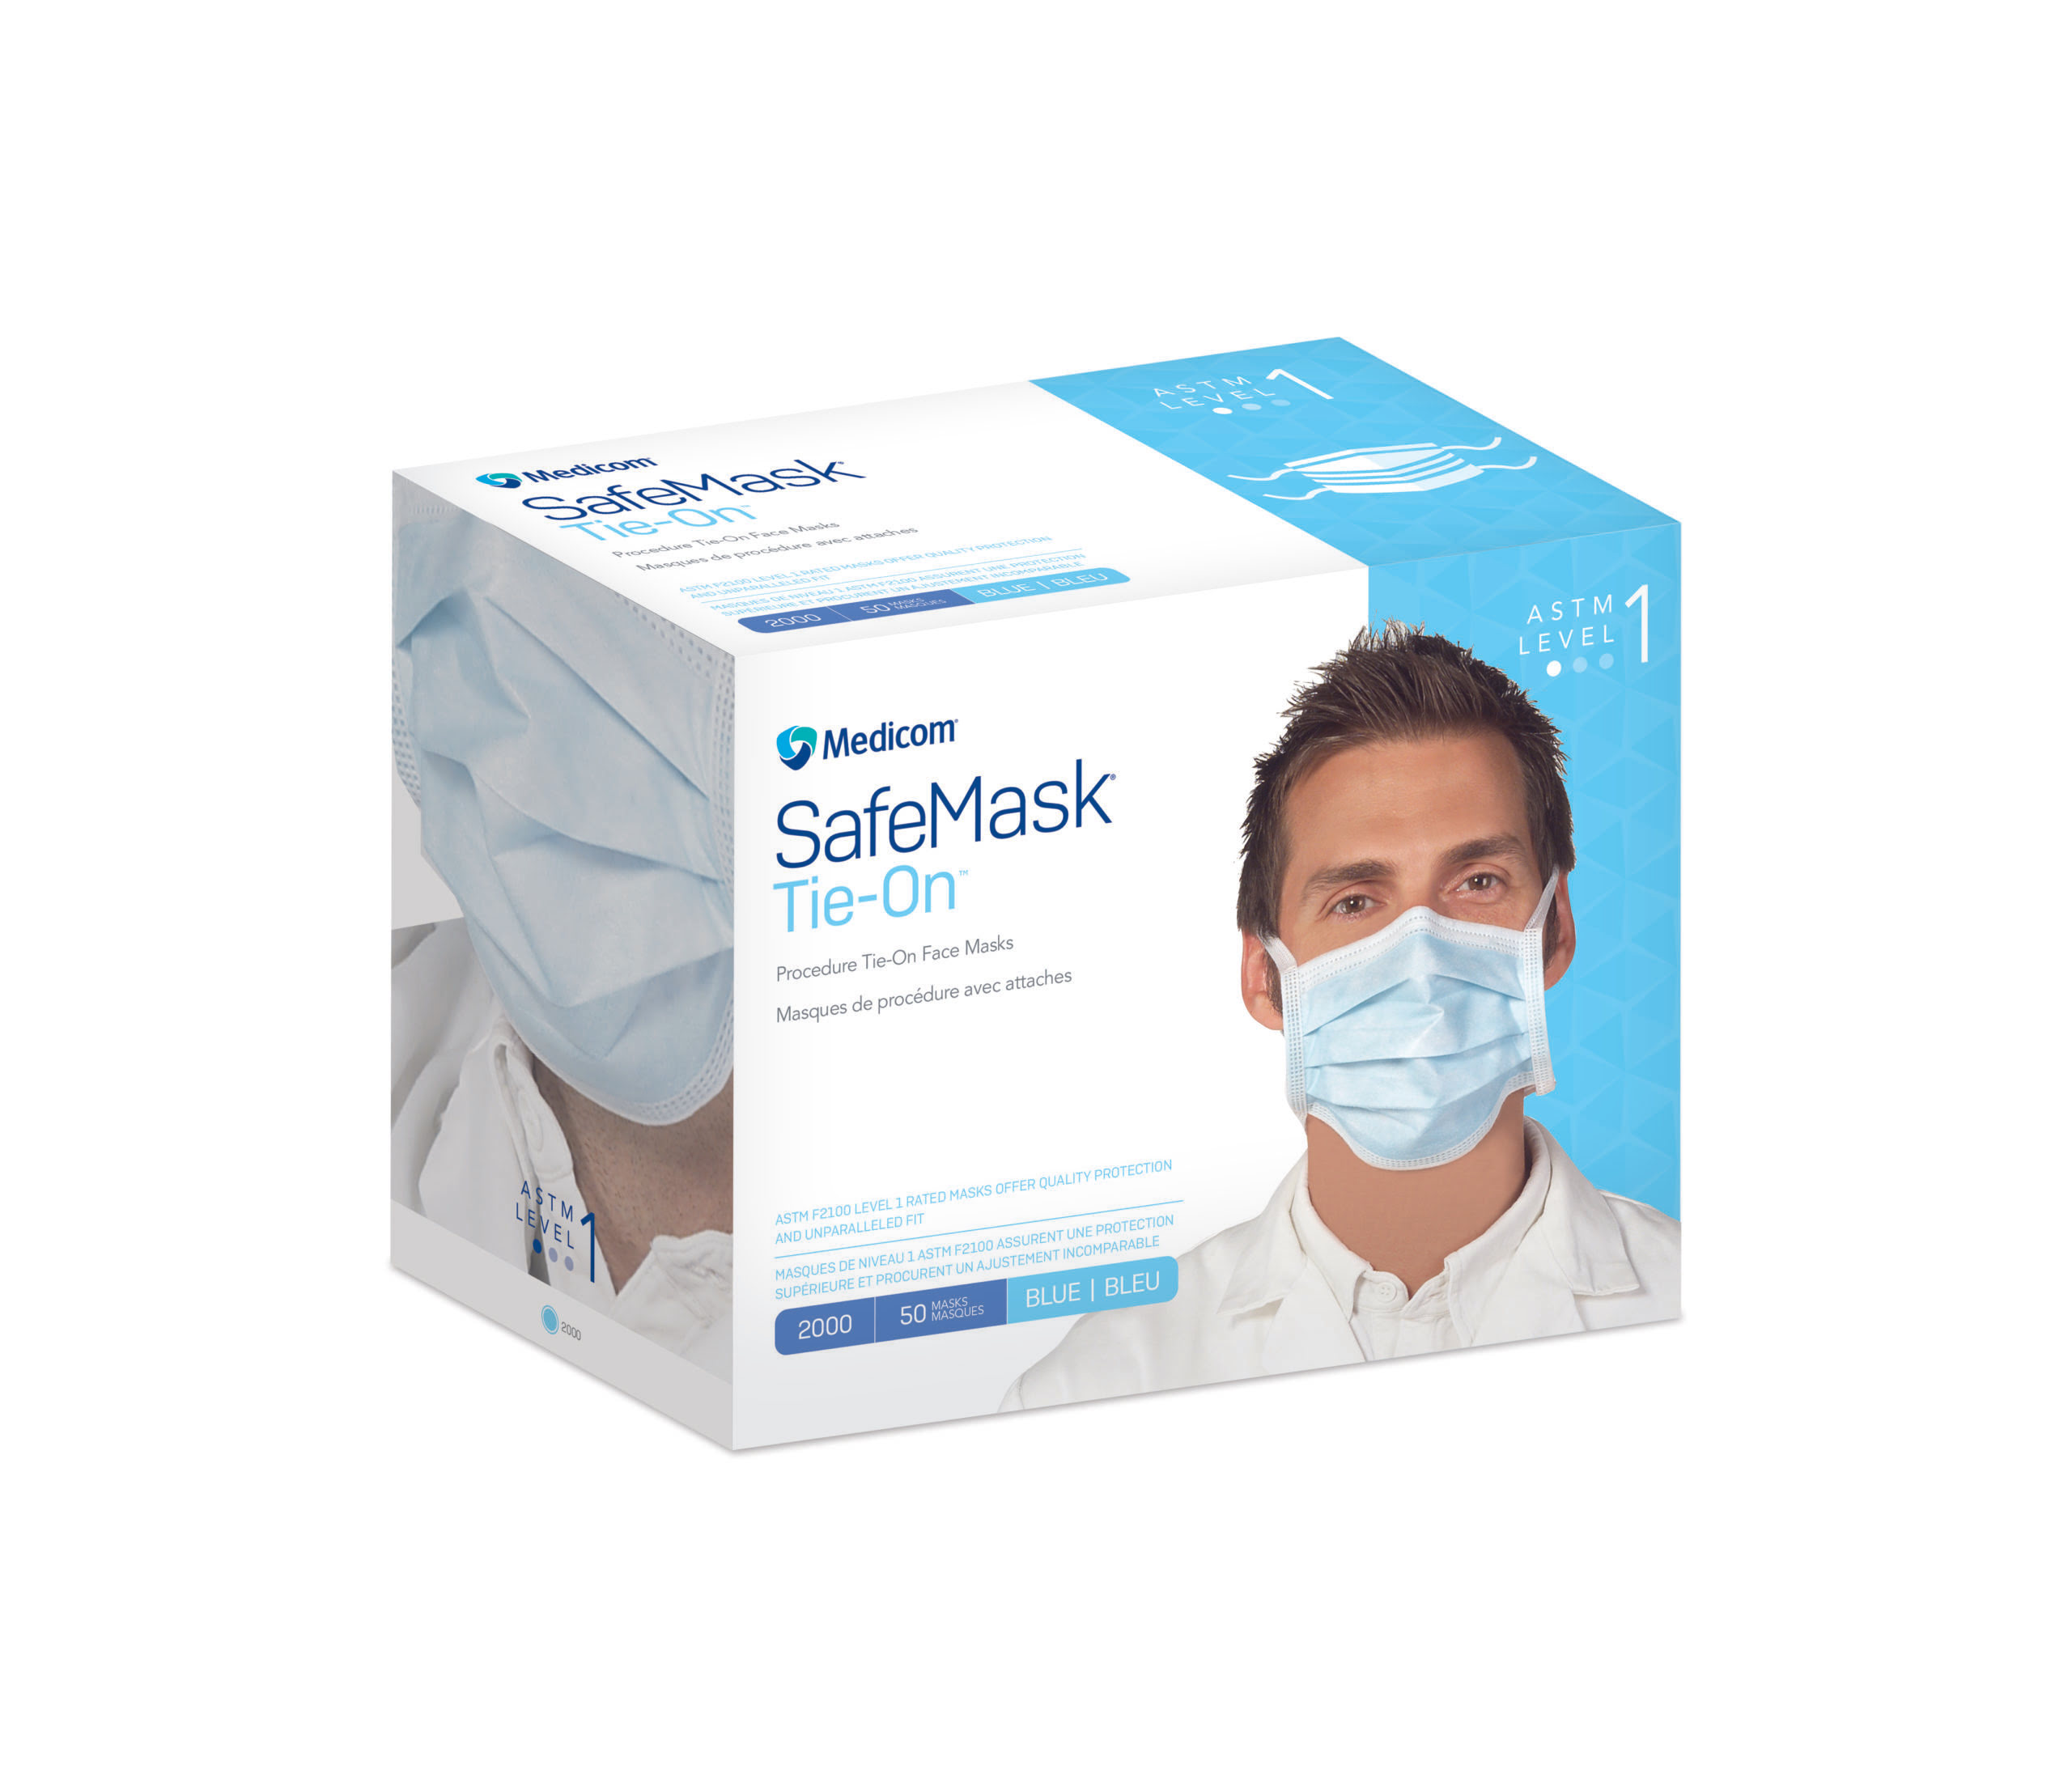 Coronavirus Safemask - ราคา - ของแท้ - รีวิว - pantip